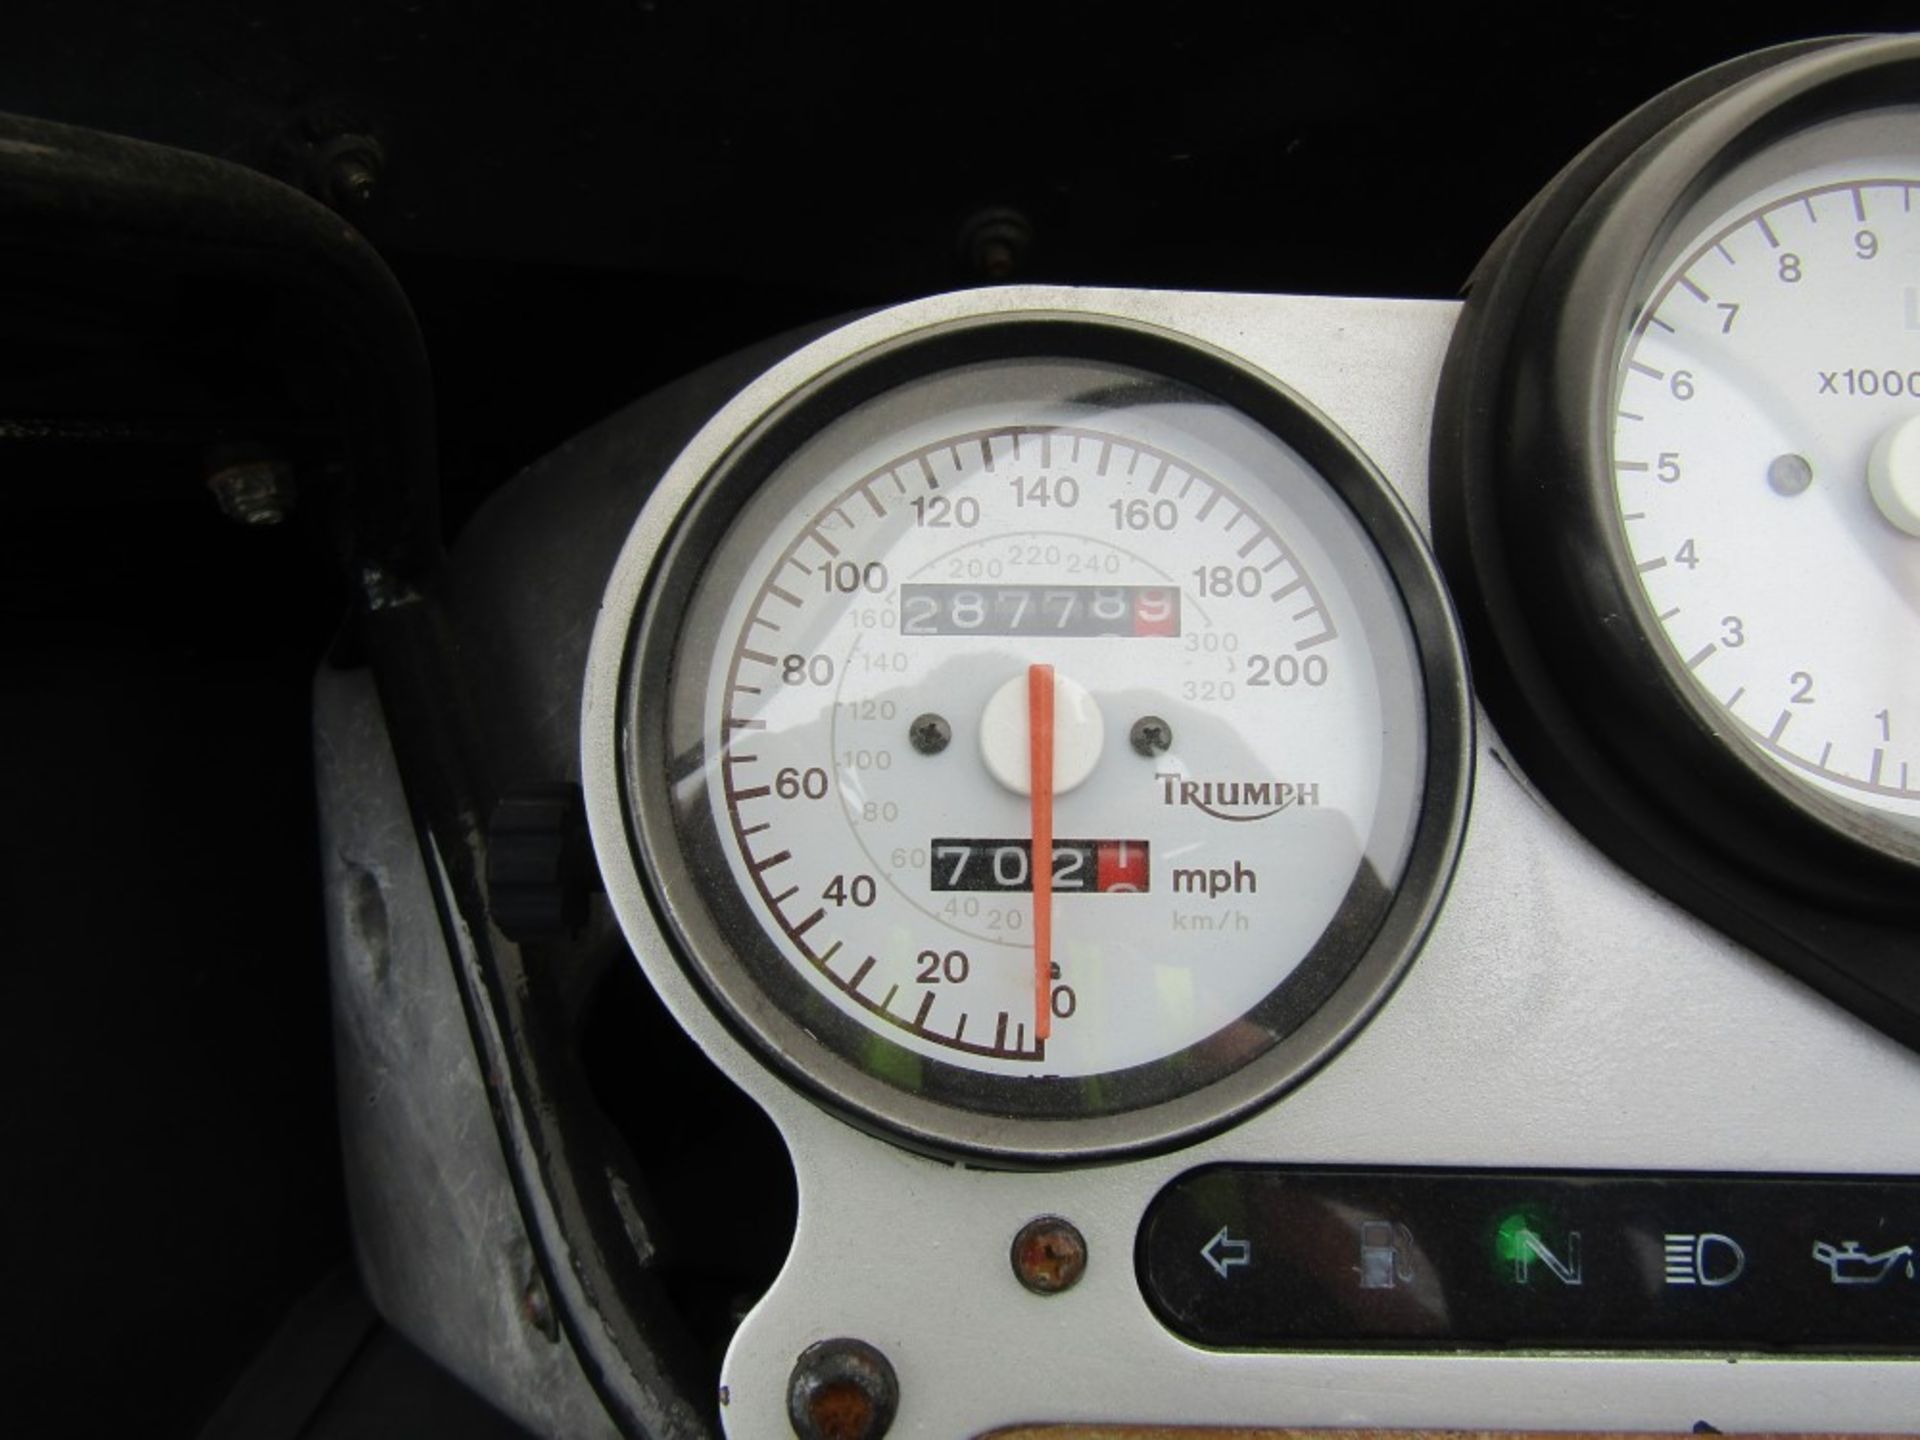 N reg TRIUMPH DAYTONA 900CC MOTORCYCLE, 1ST REG 03/96, TEST 03/23, 28778M, V5 HERE, 7 FORMER KEEPERS - Image 5 of 5